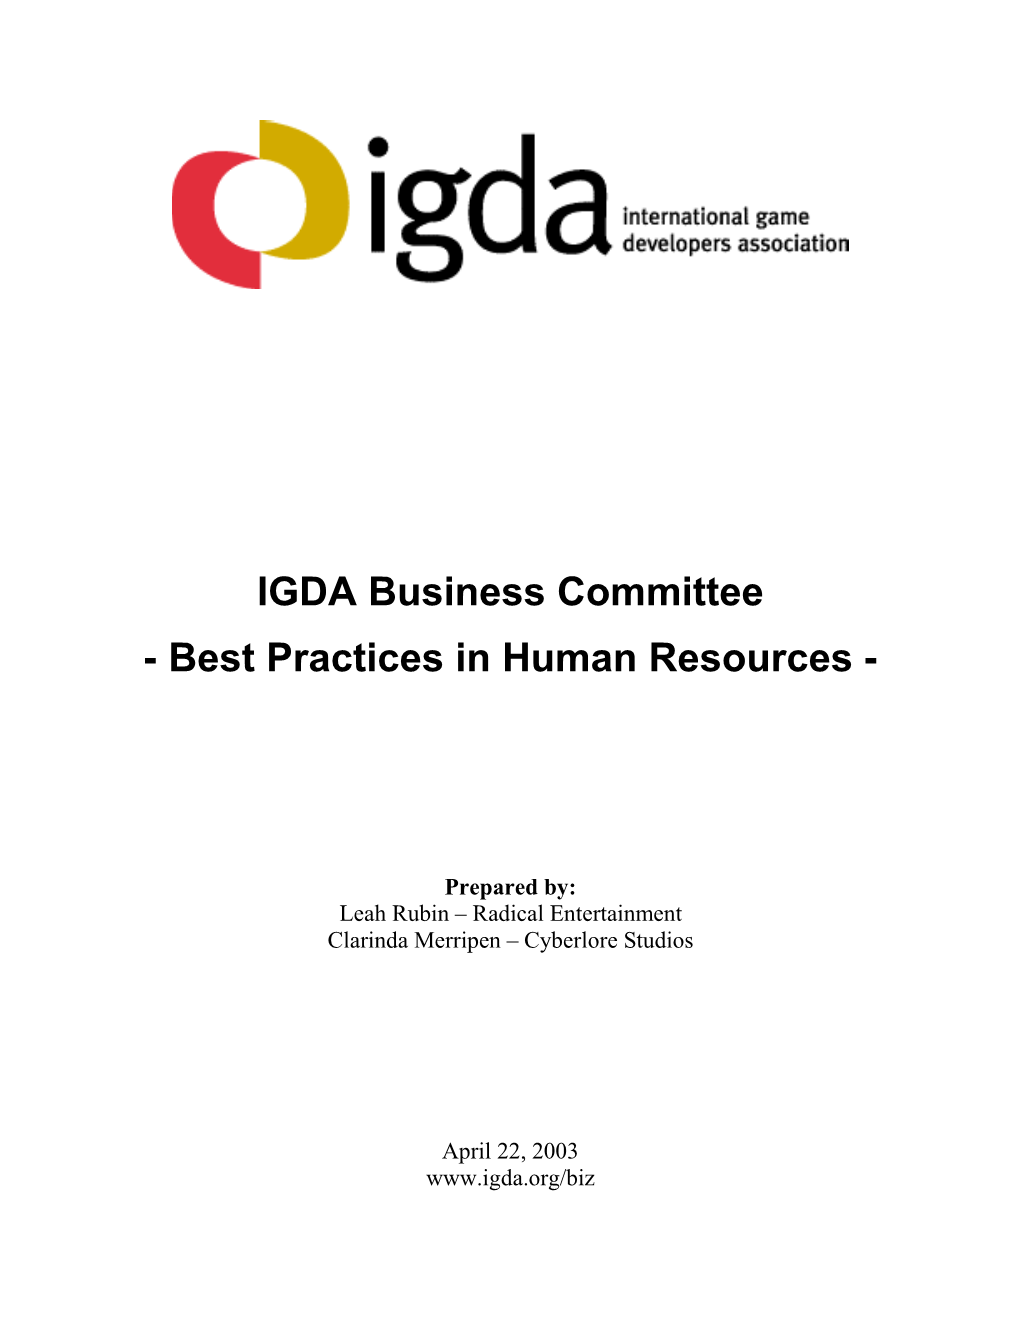 Best Practices in Human Resources